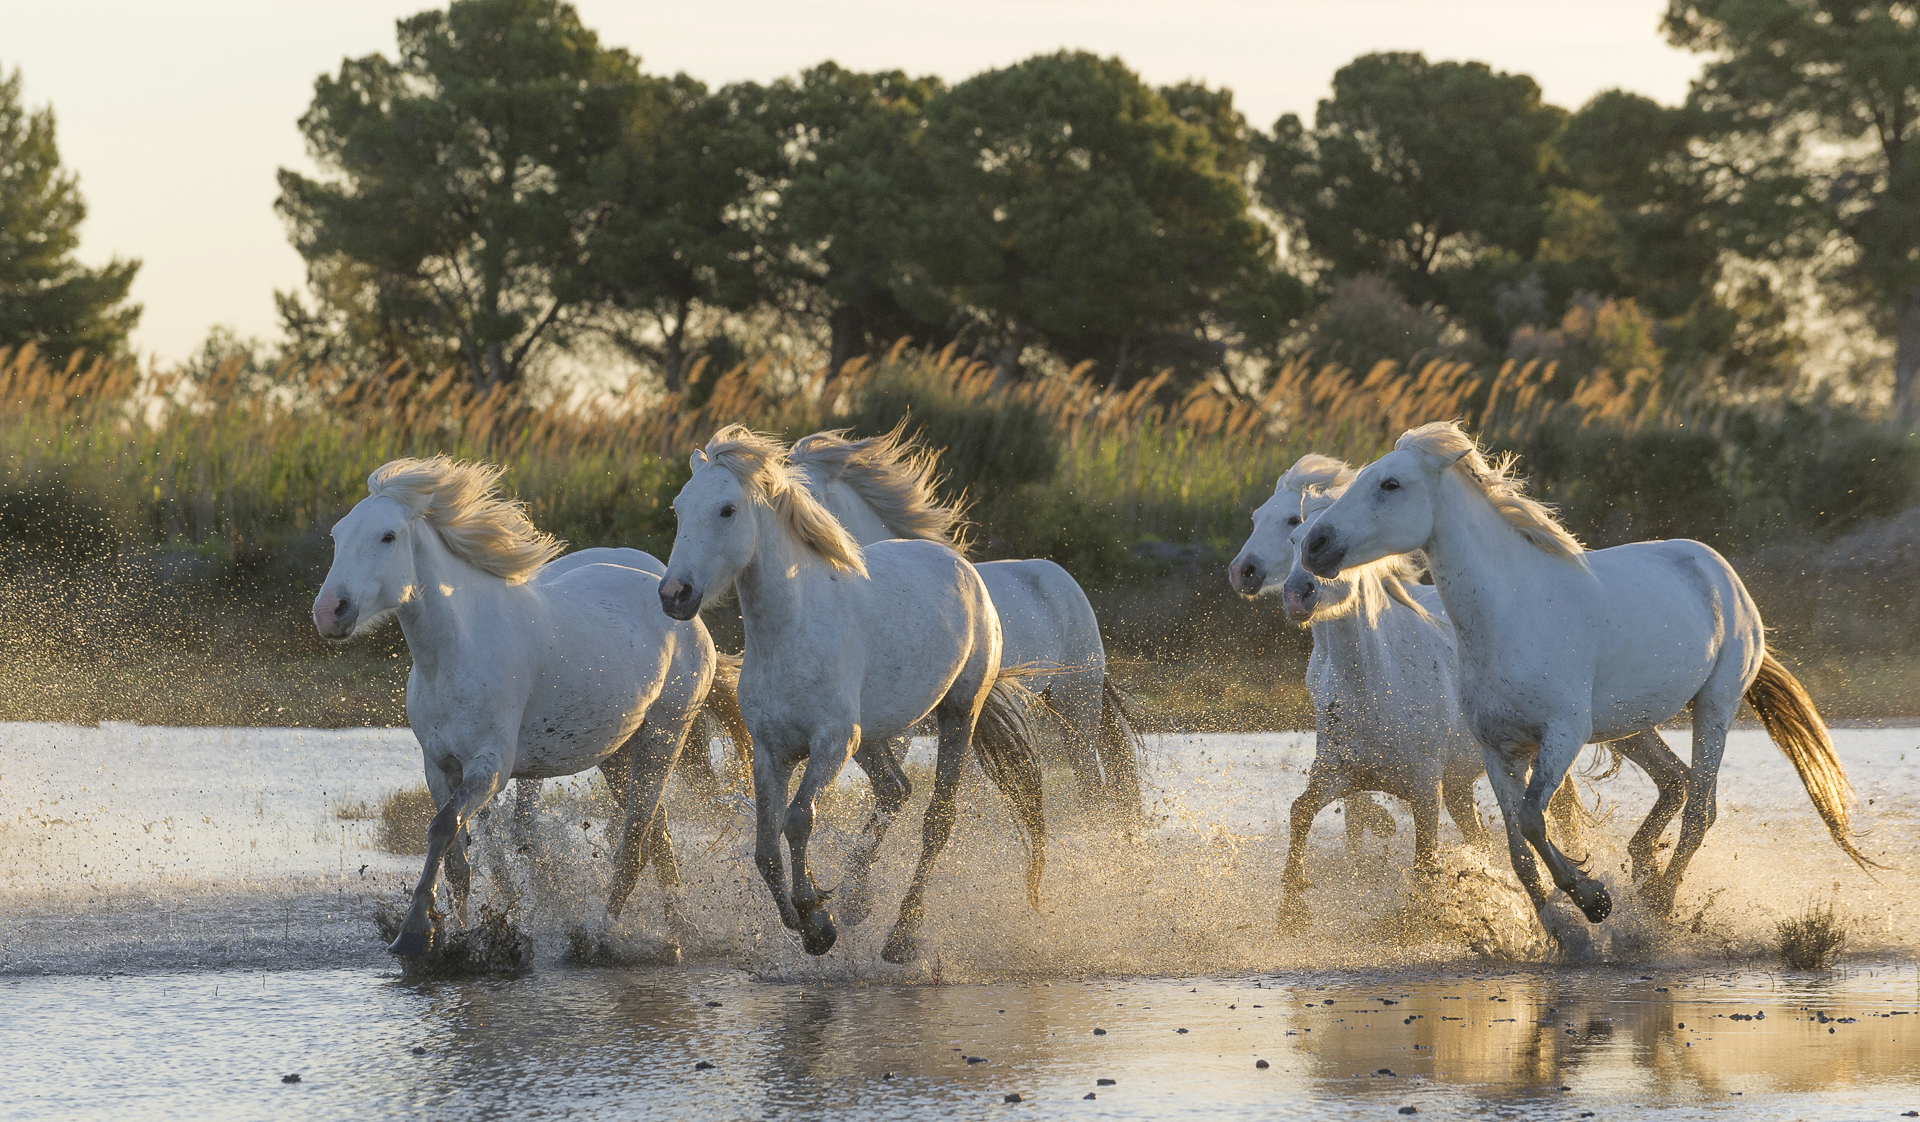 Horses running in Mediterranean wetland. Parc naturel régional de Camargue. France.